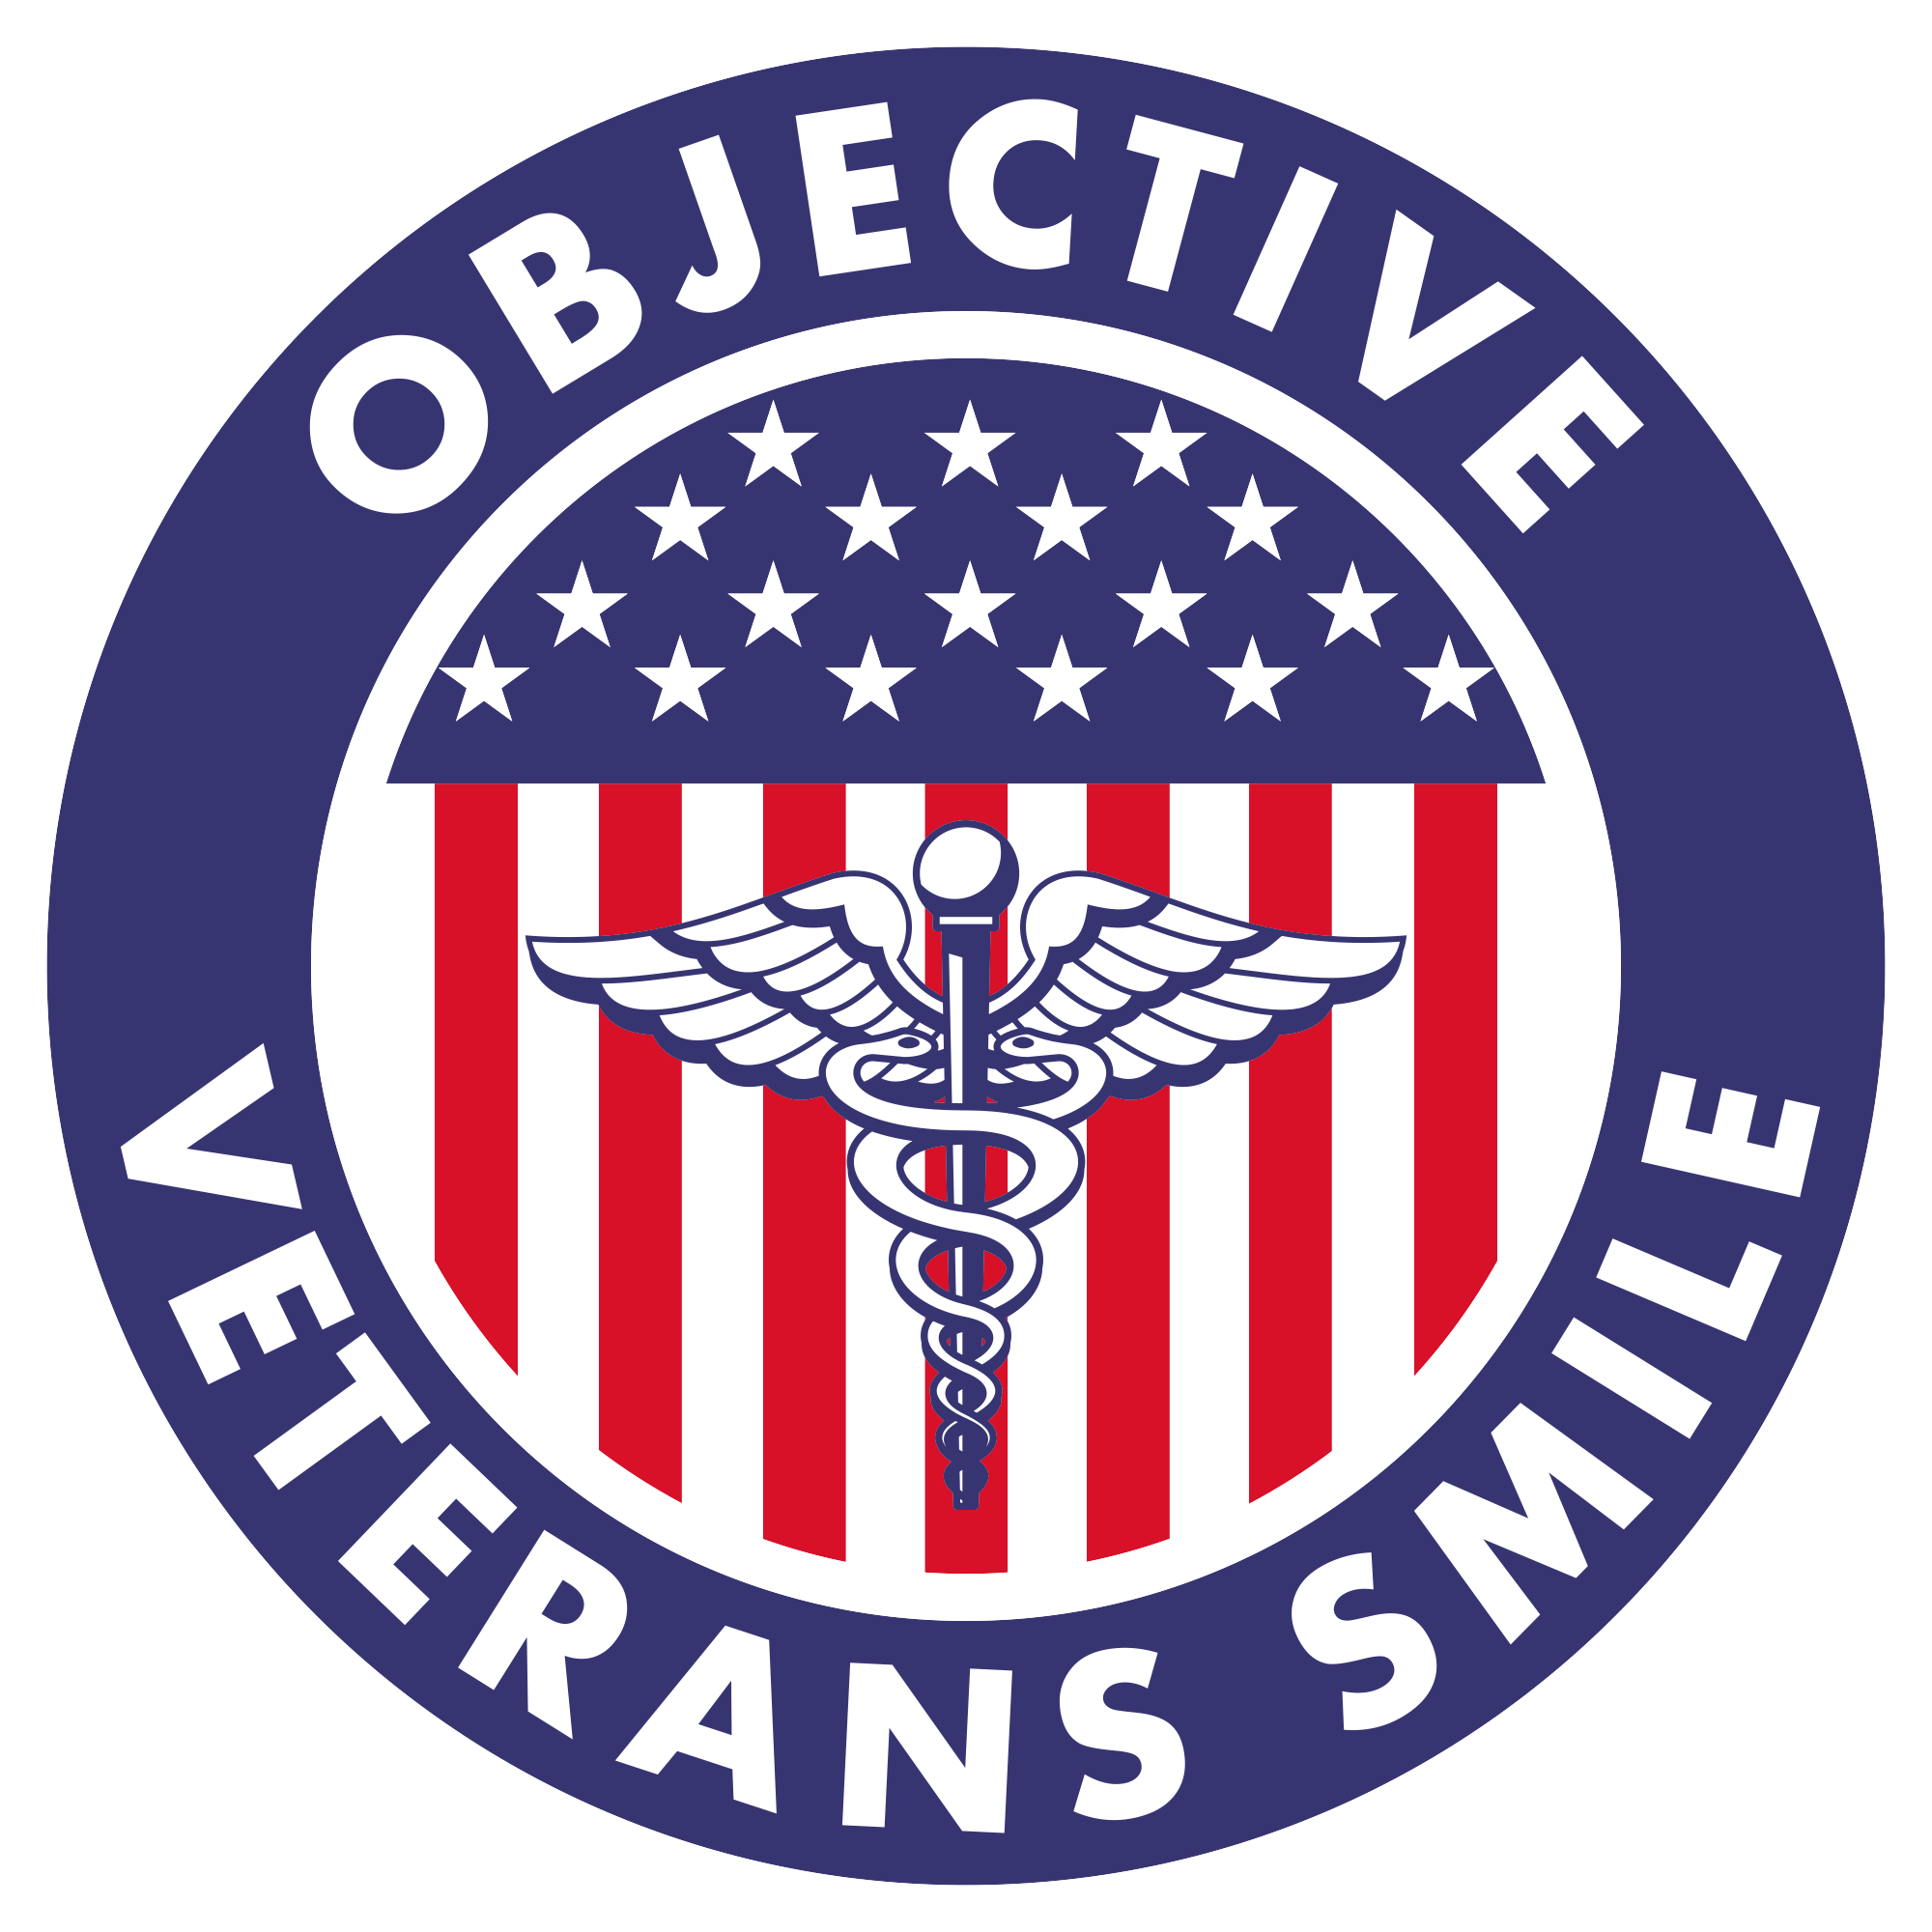 Objective Veterans Smile logo